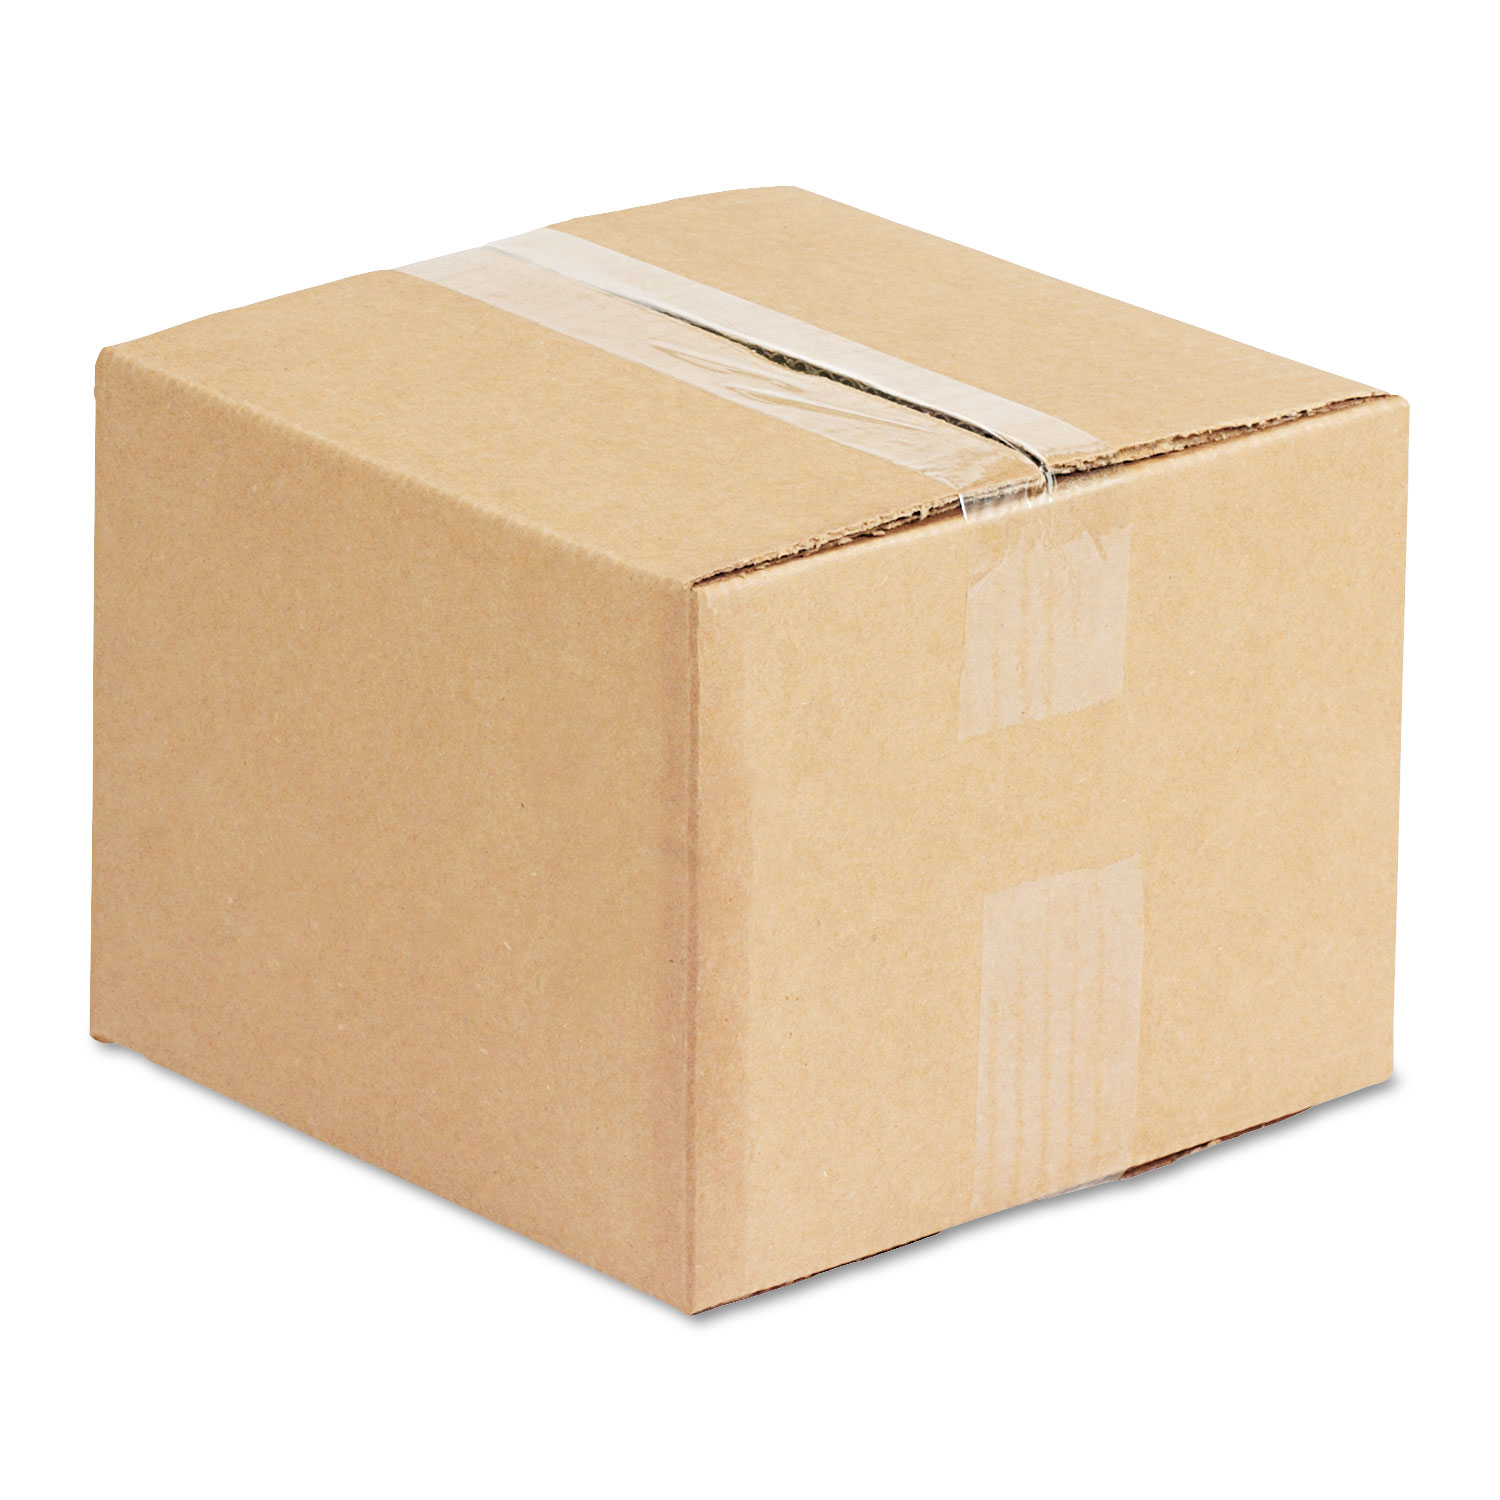 Brown Corrugated - Fixed-Depth Shipping Boxes, 8l x 8w x 6h, 25/Bundle